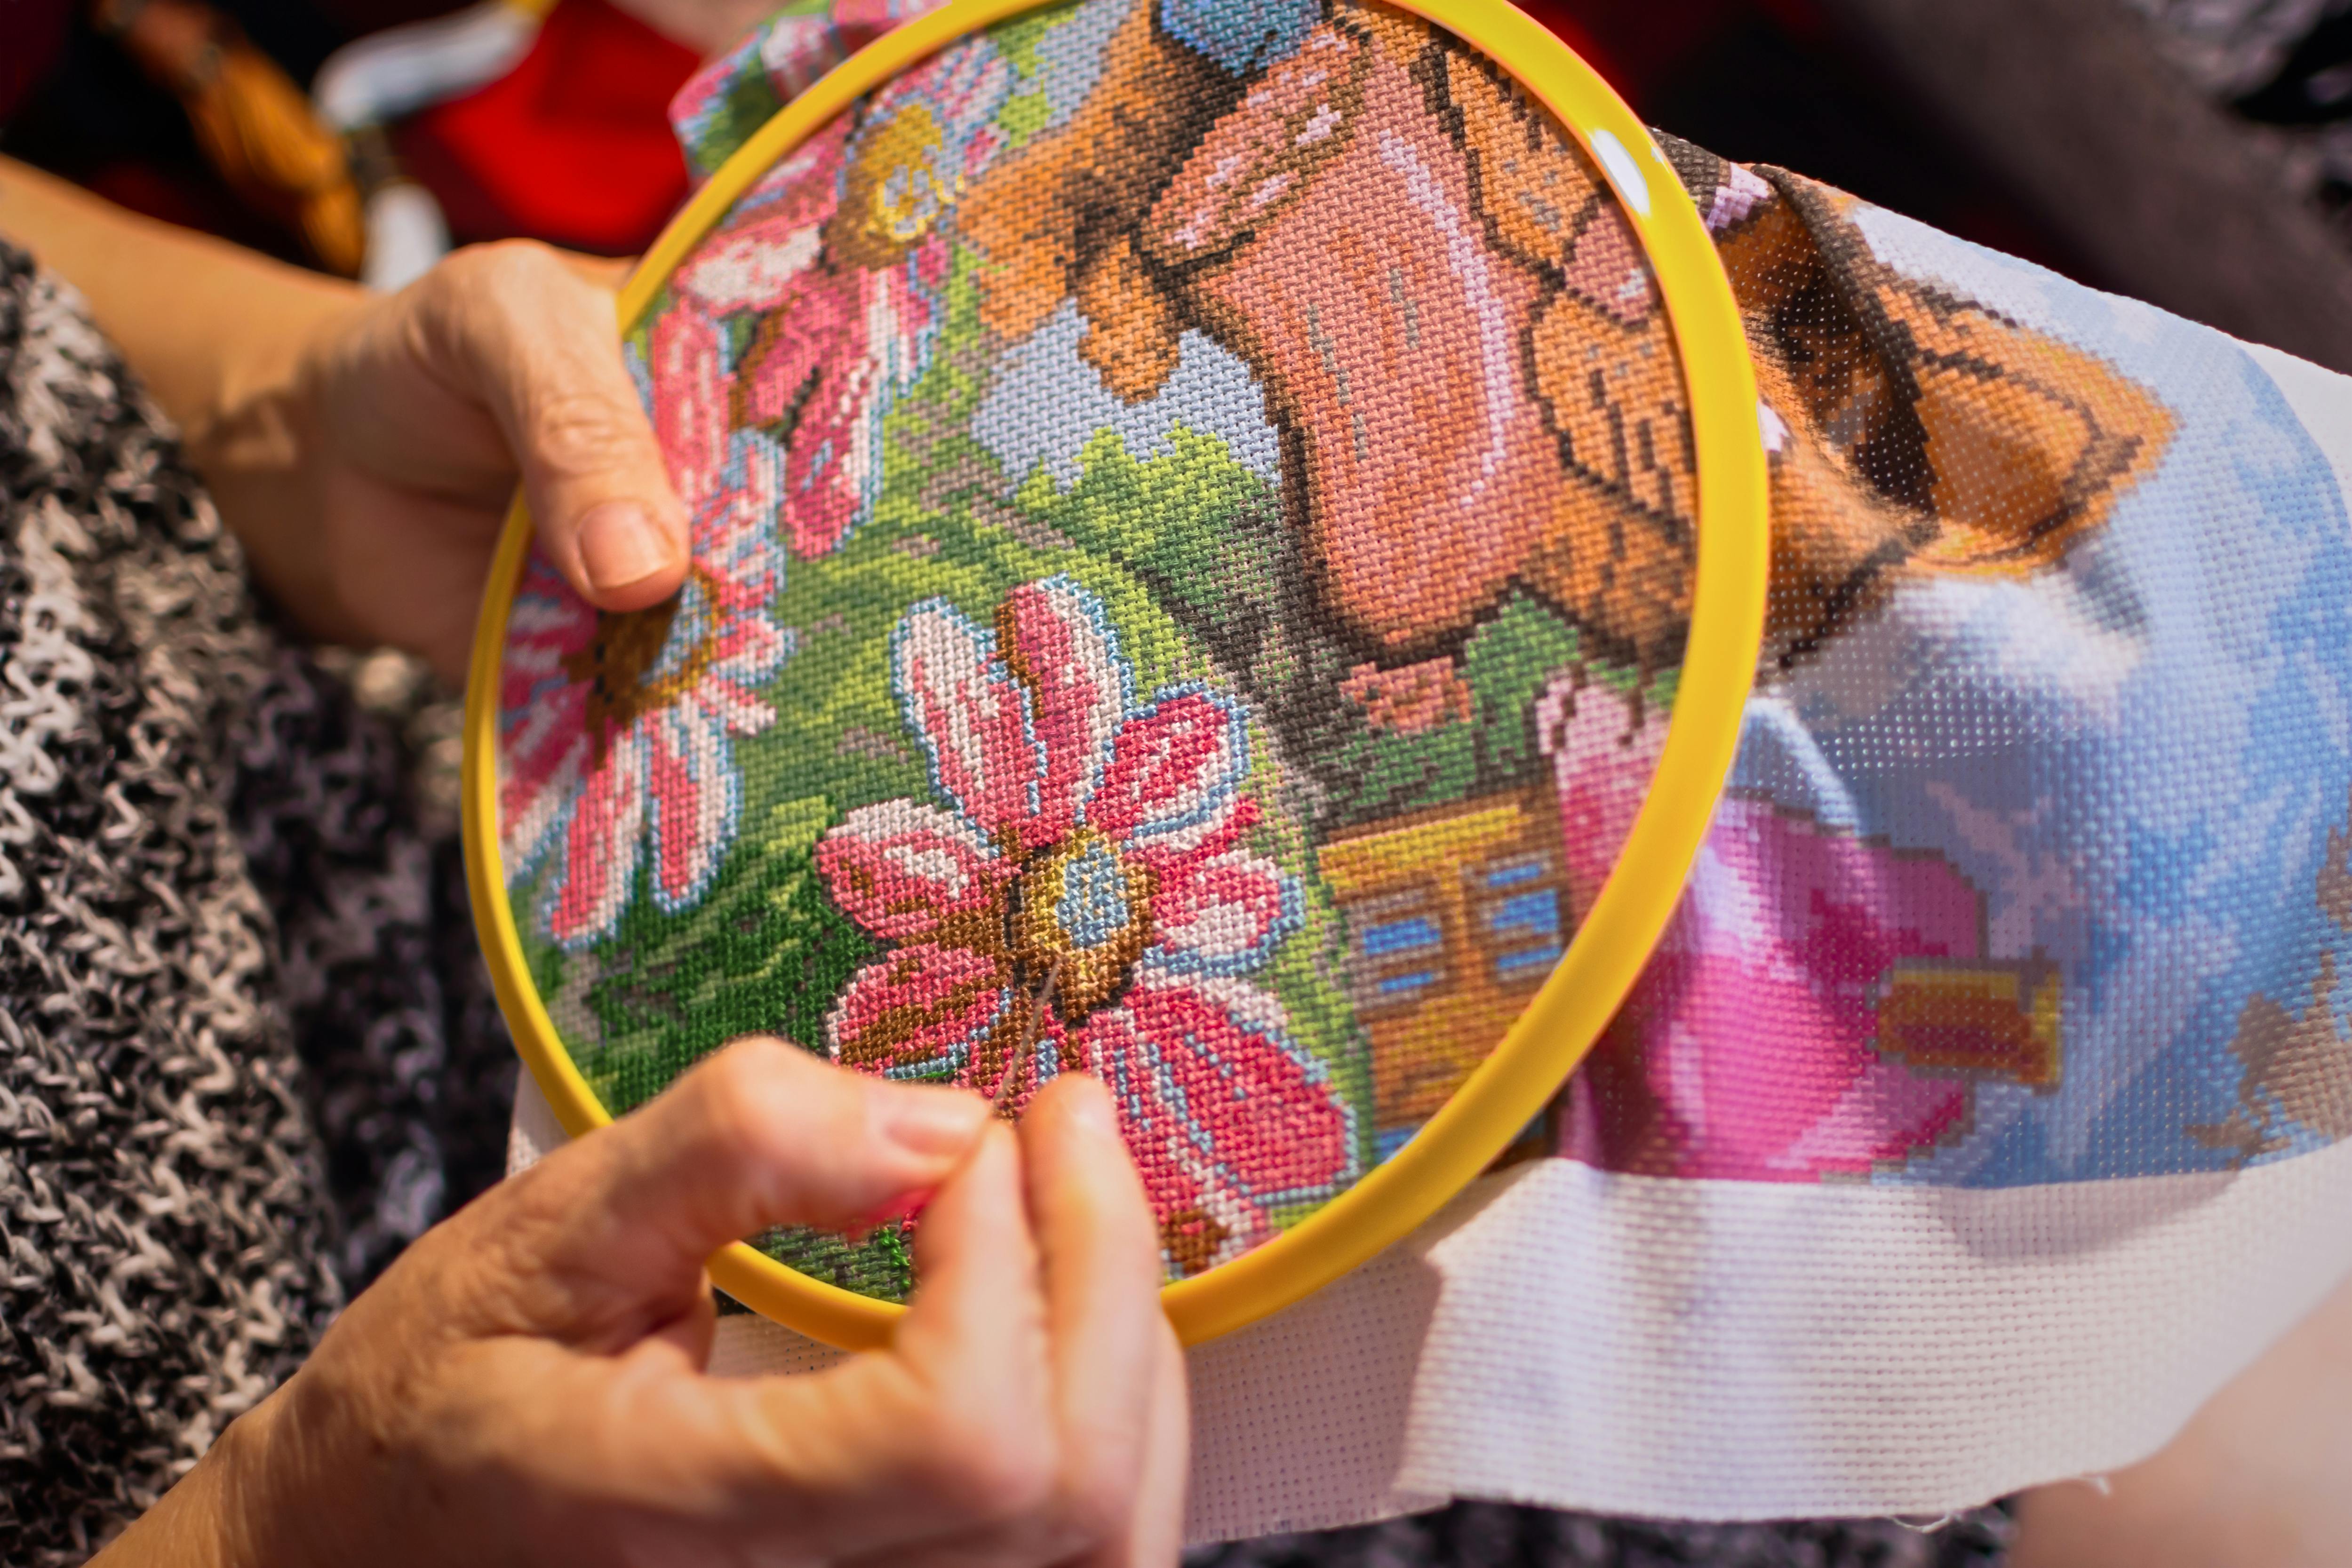  woman creating a cross stitch pattern of flowers